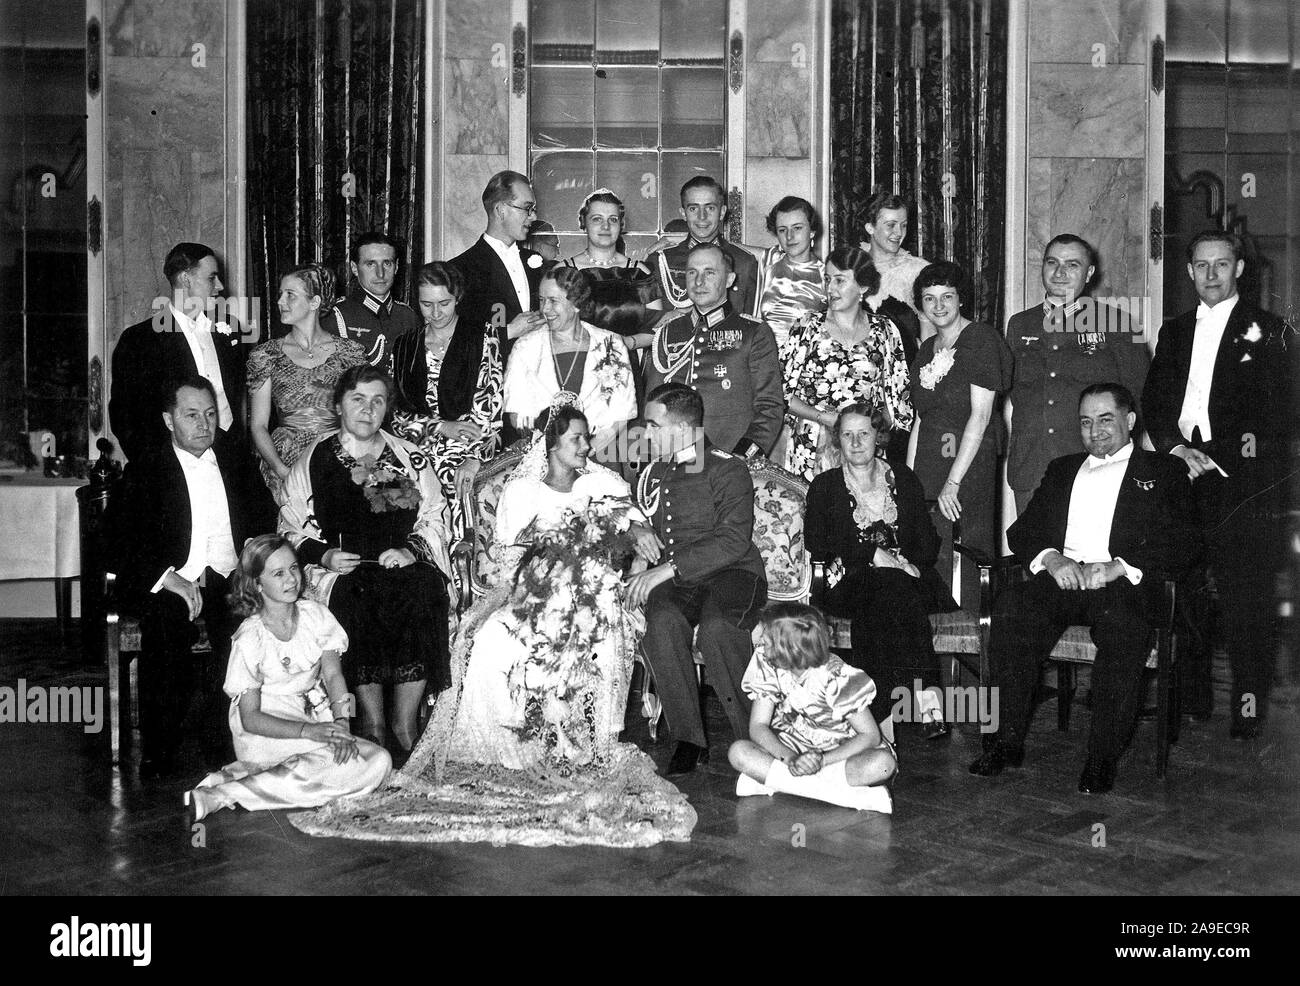 Eva Braun Collection (Album 2) - German wedding of a military man ca. 1930s Germany Stock Photo